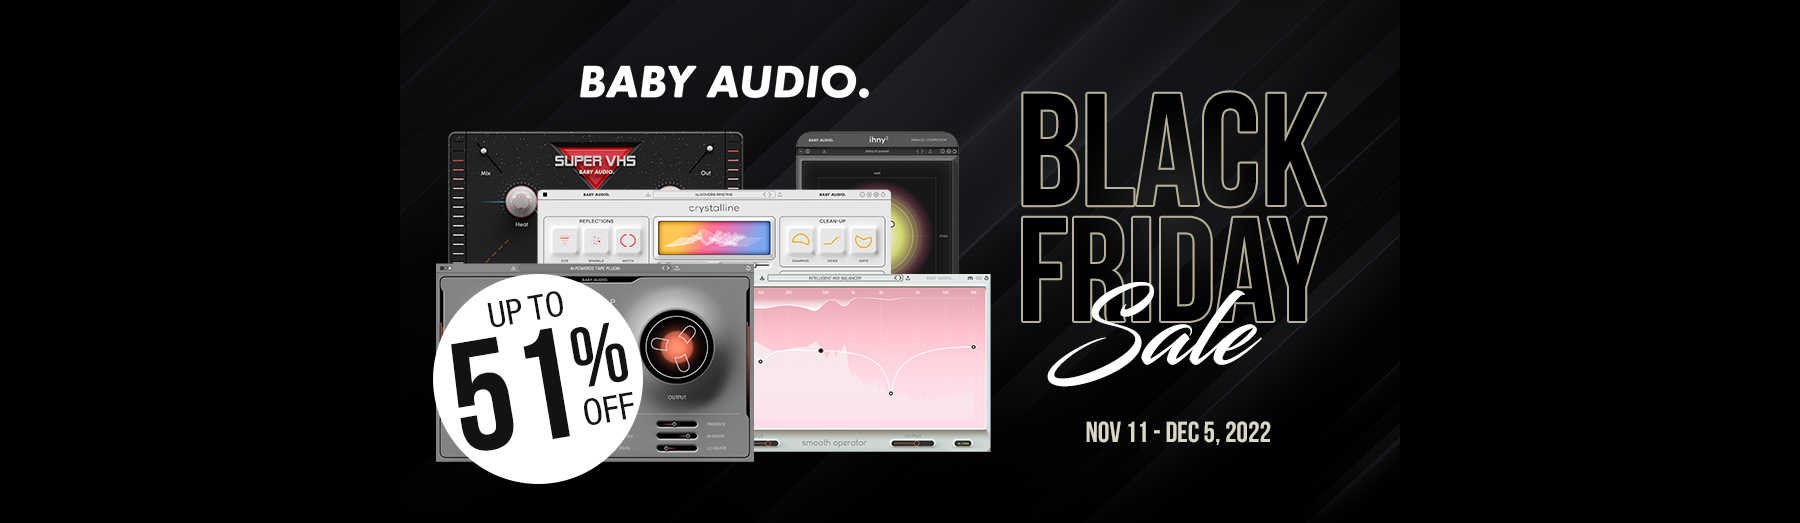 BABY Audio Black Friday Sale